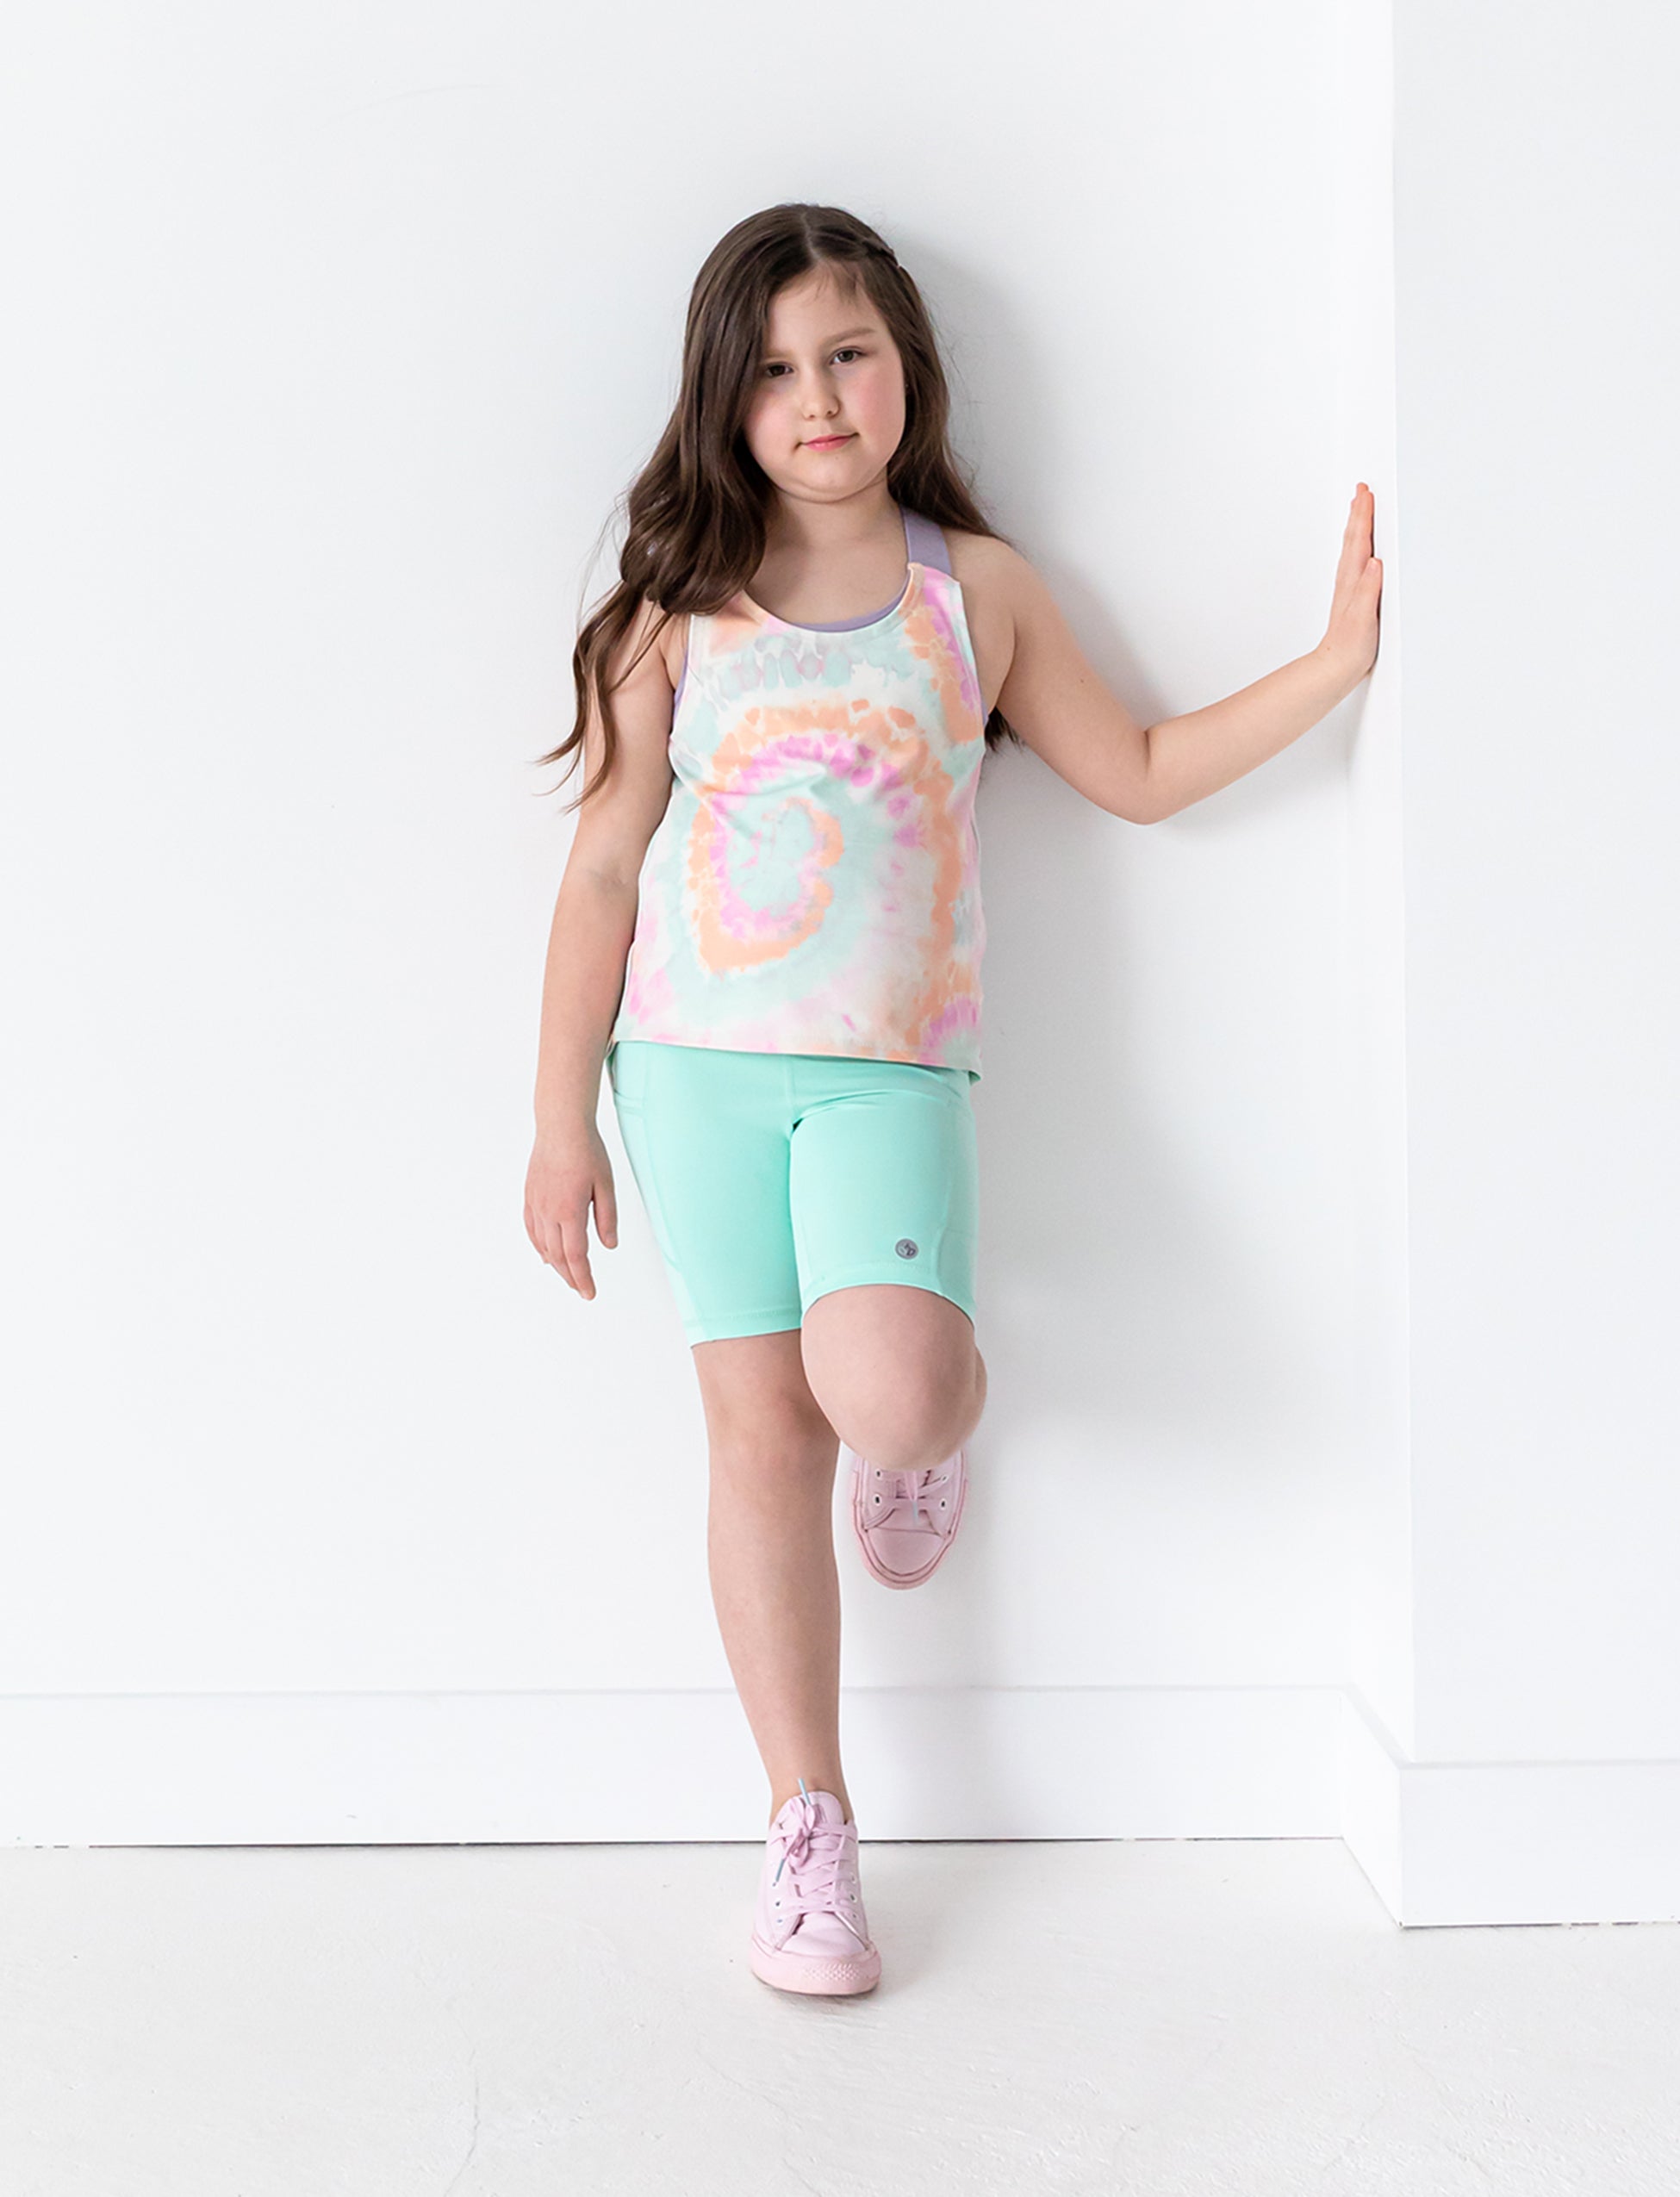 BASICO Girls Dance, Bike Shorts 6 Value Packs - for Sports, Play